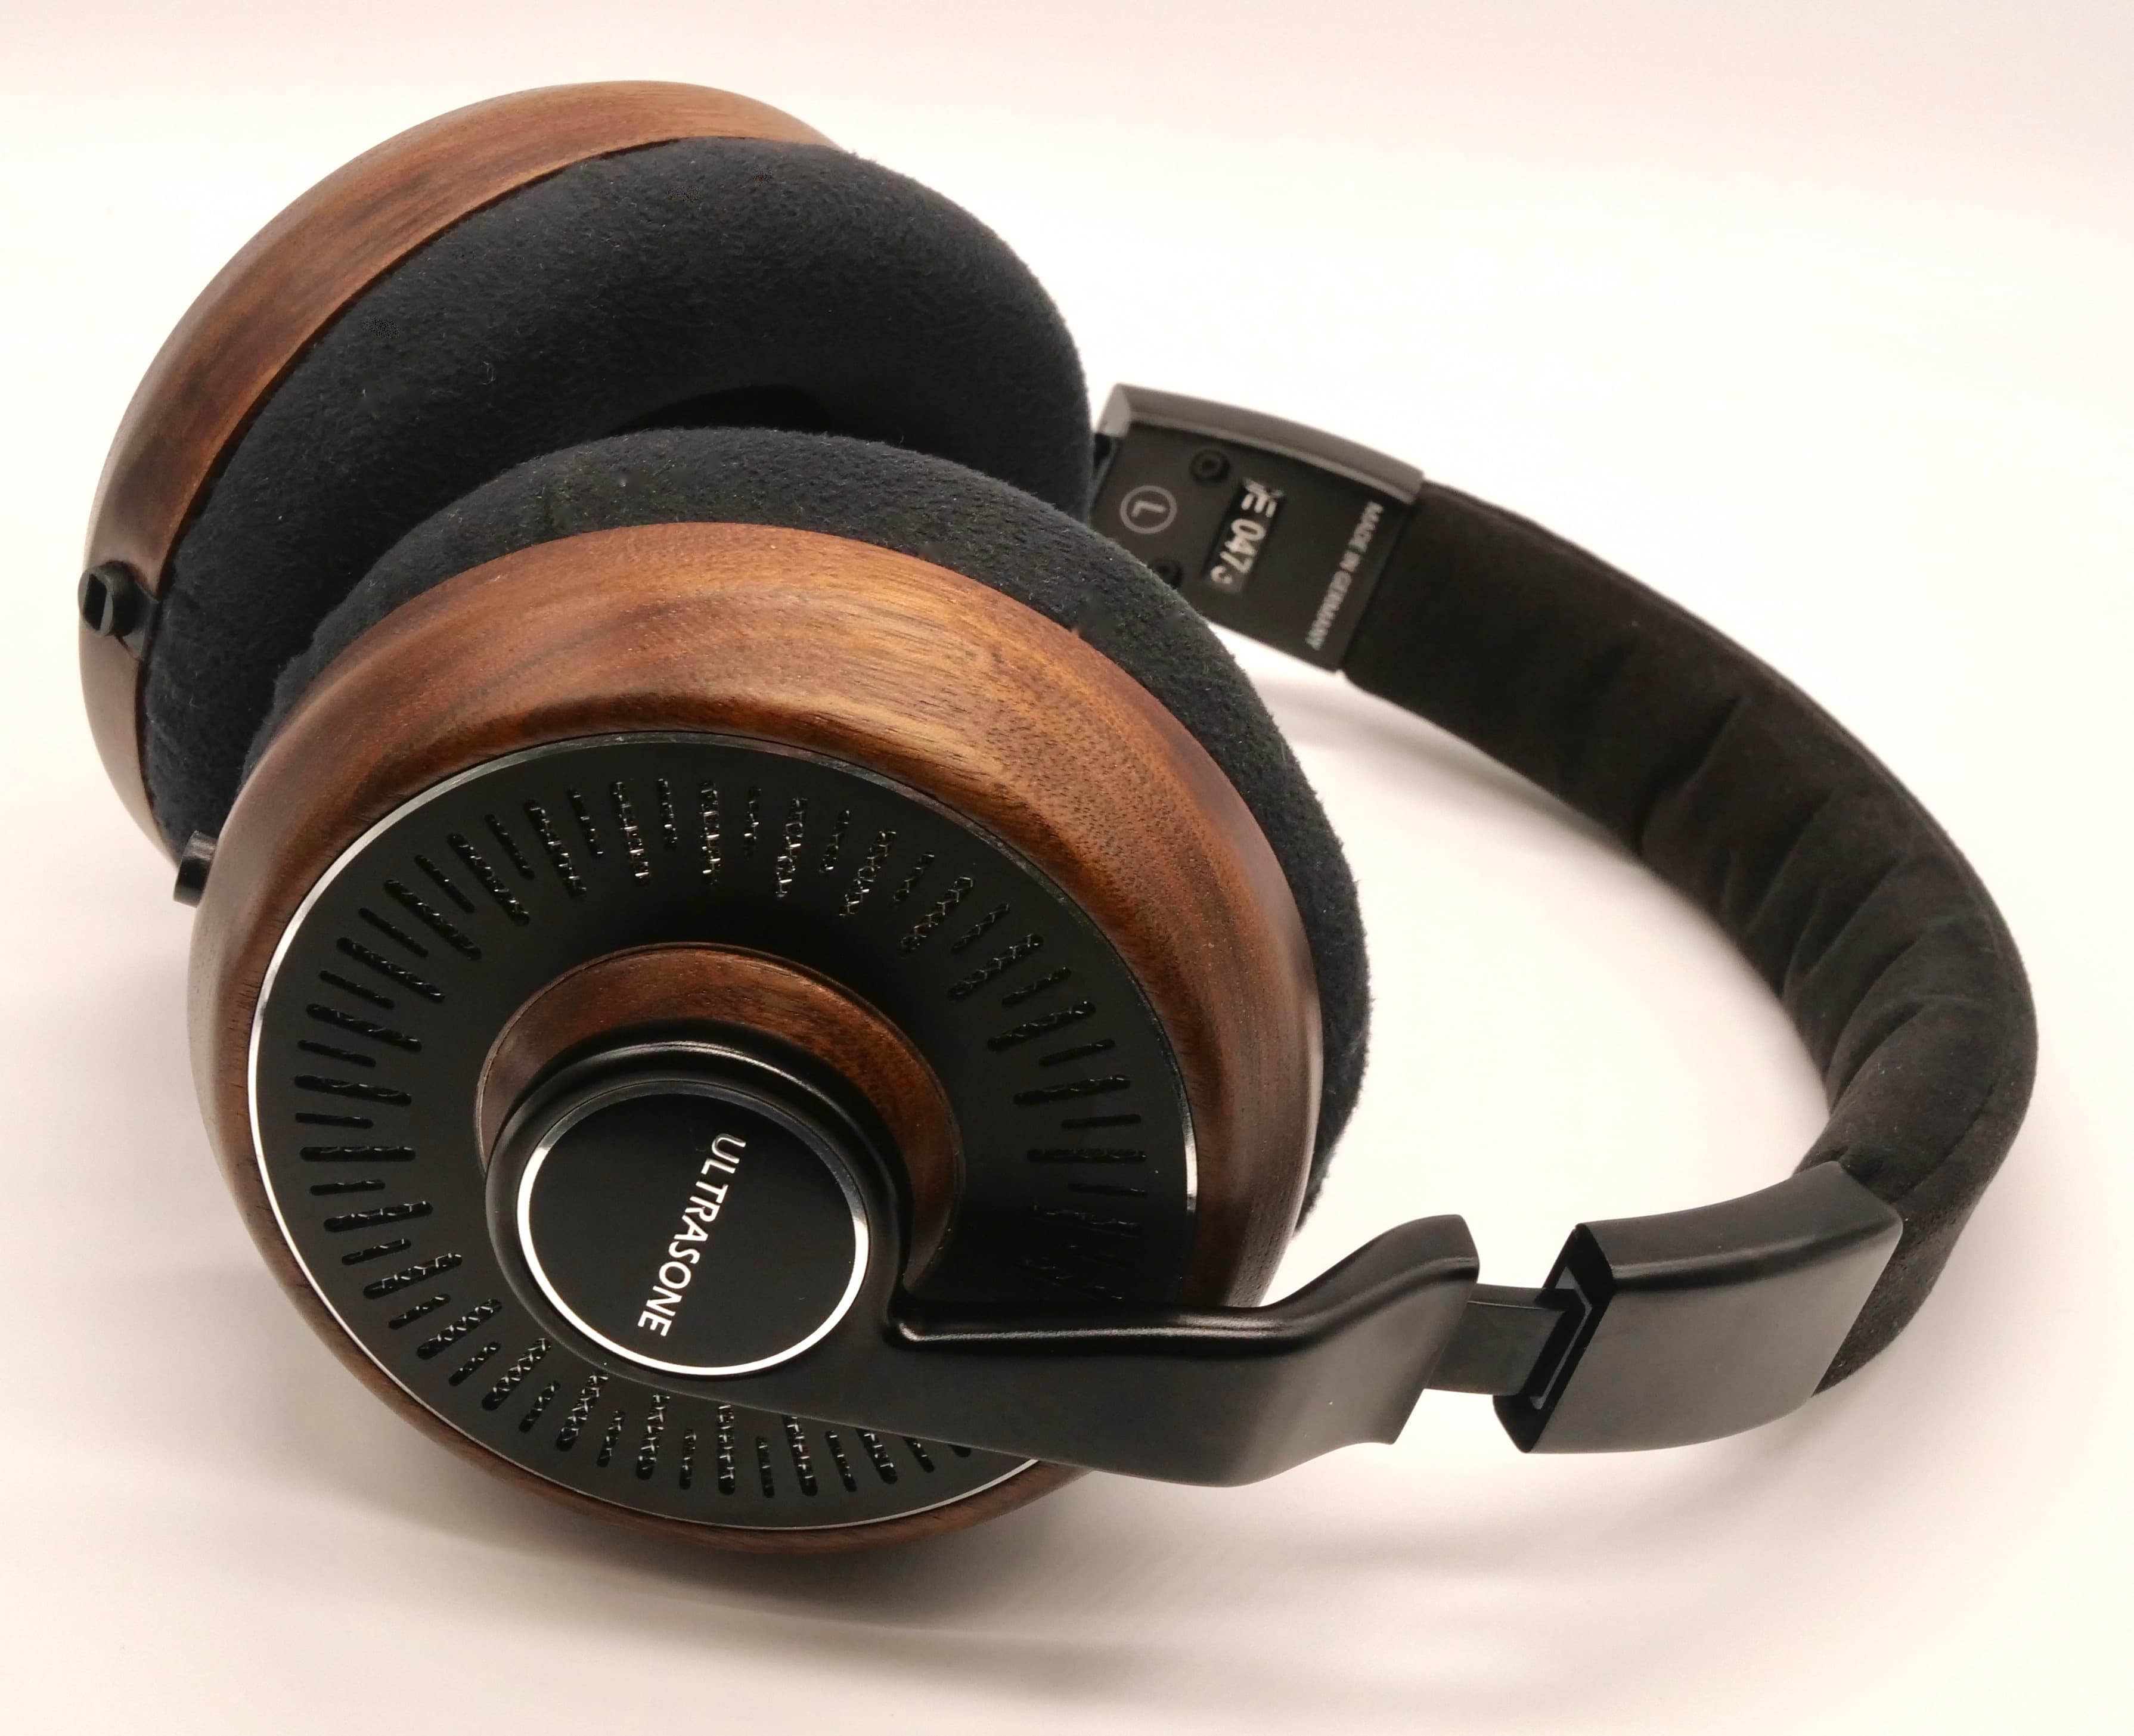 Ultrasone Edition Eleven Open Back Headphones Review - Next Level Sound?